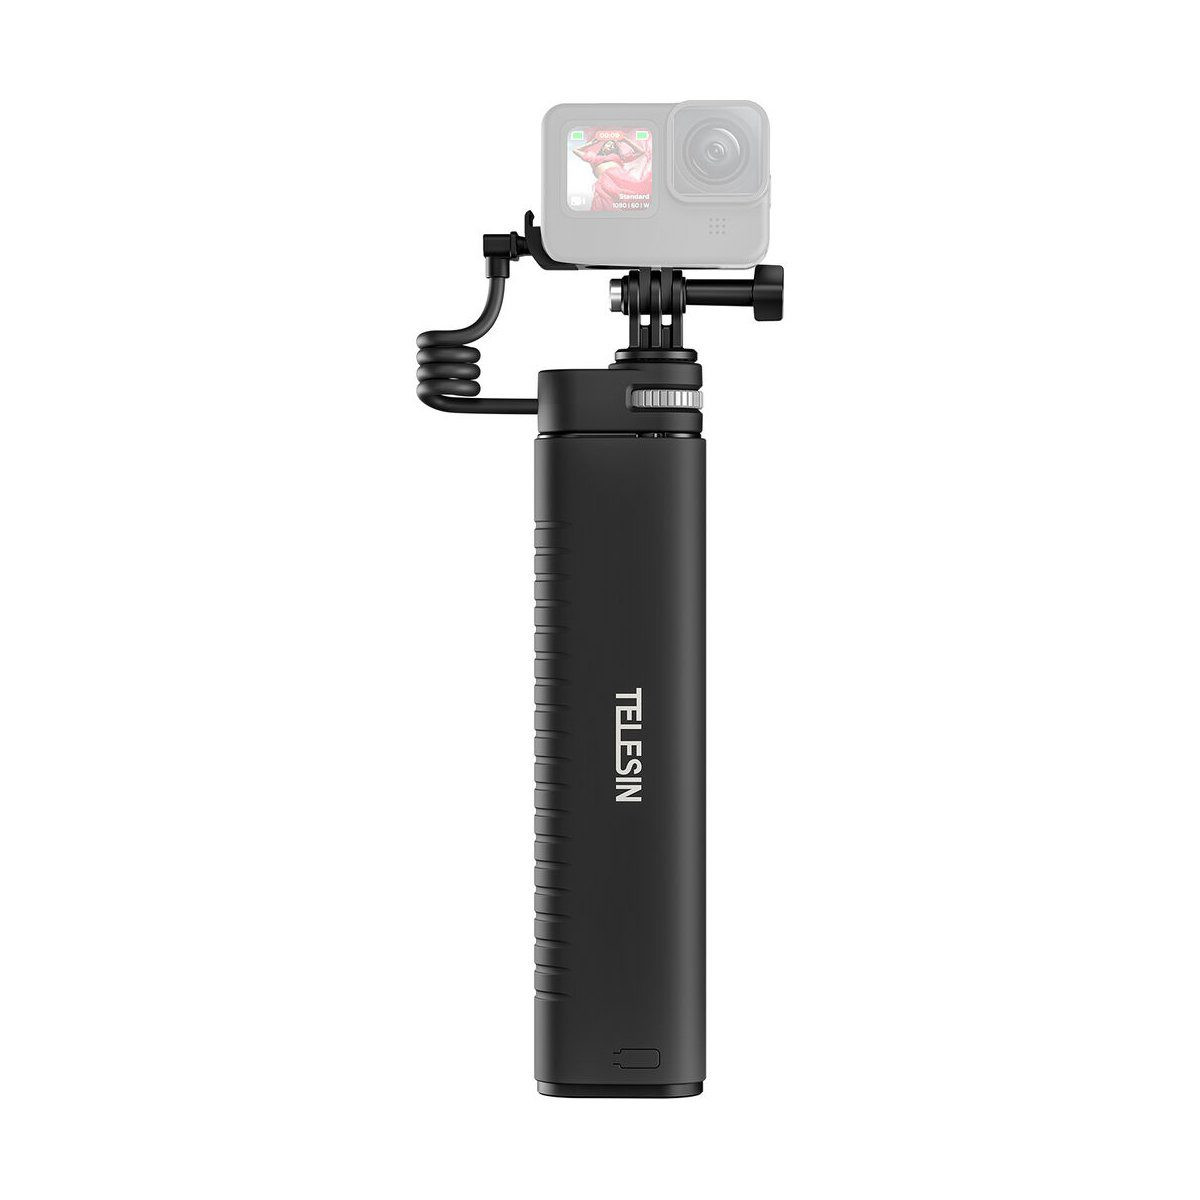 Telesin Rechargeable Selfie Stick for Action Cameras & Smartphones